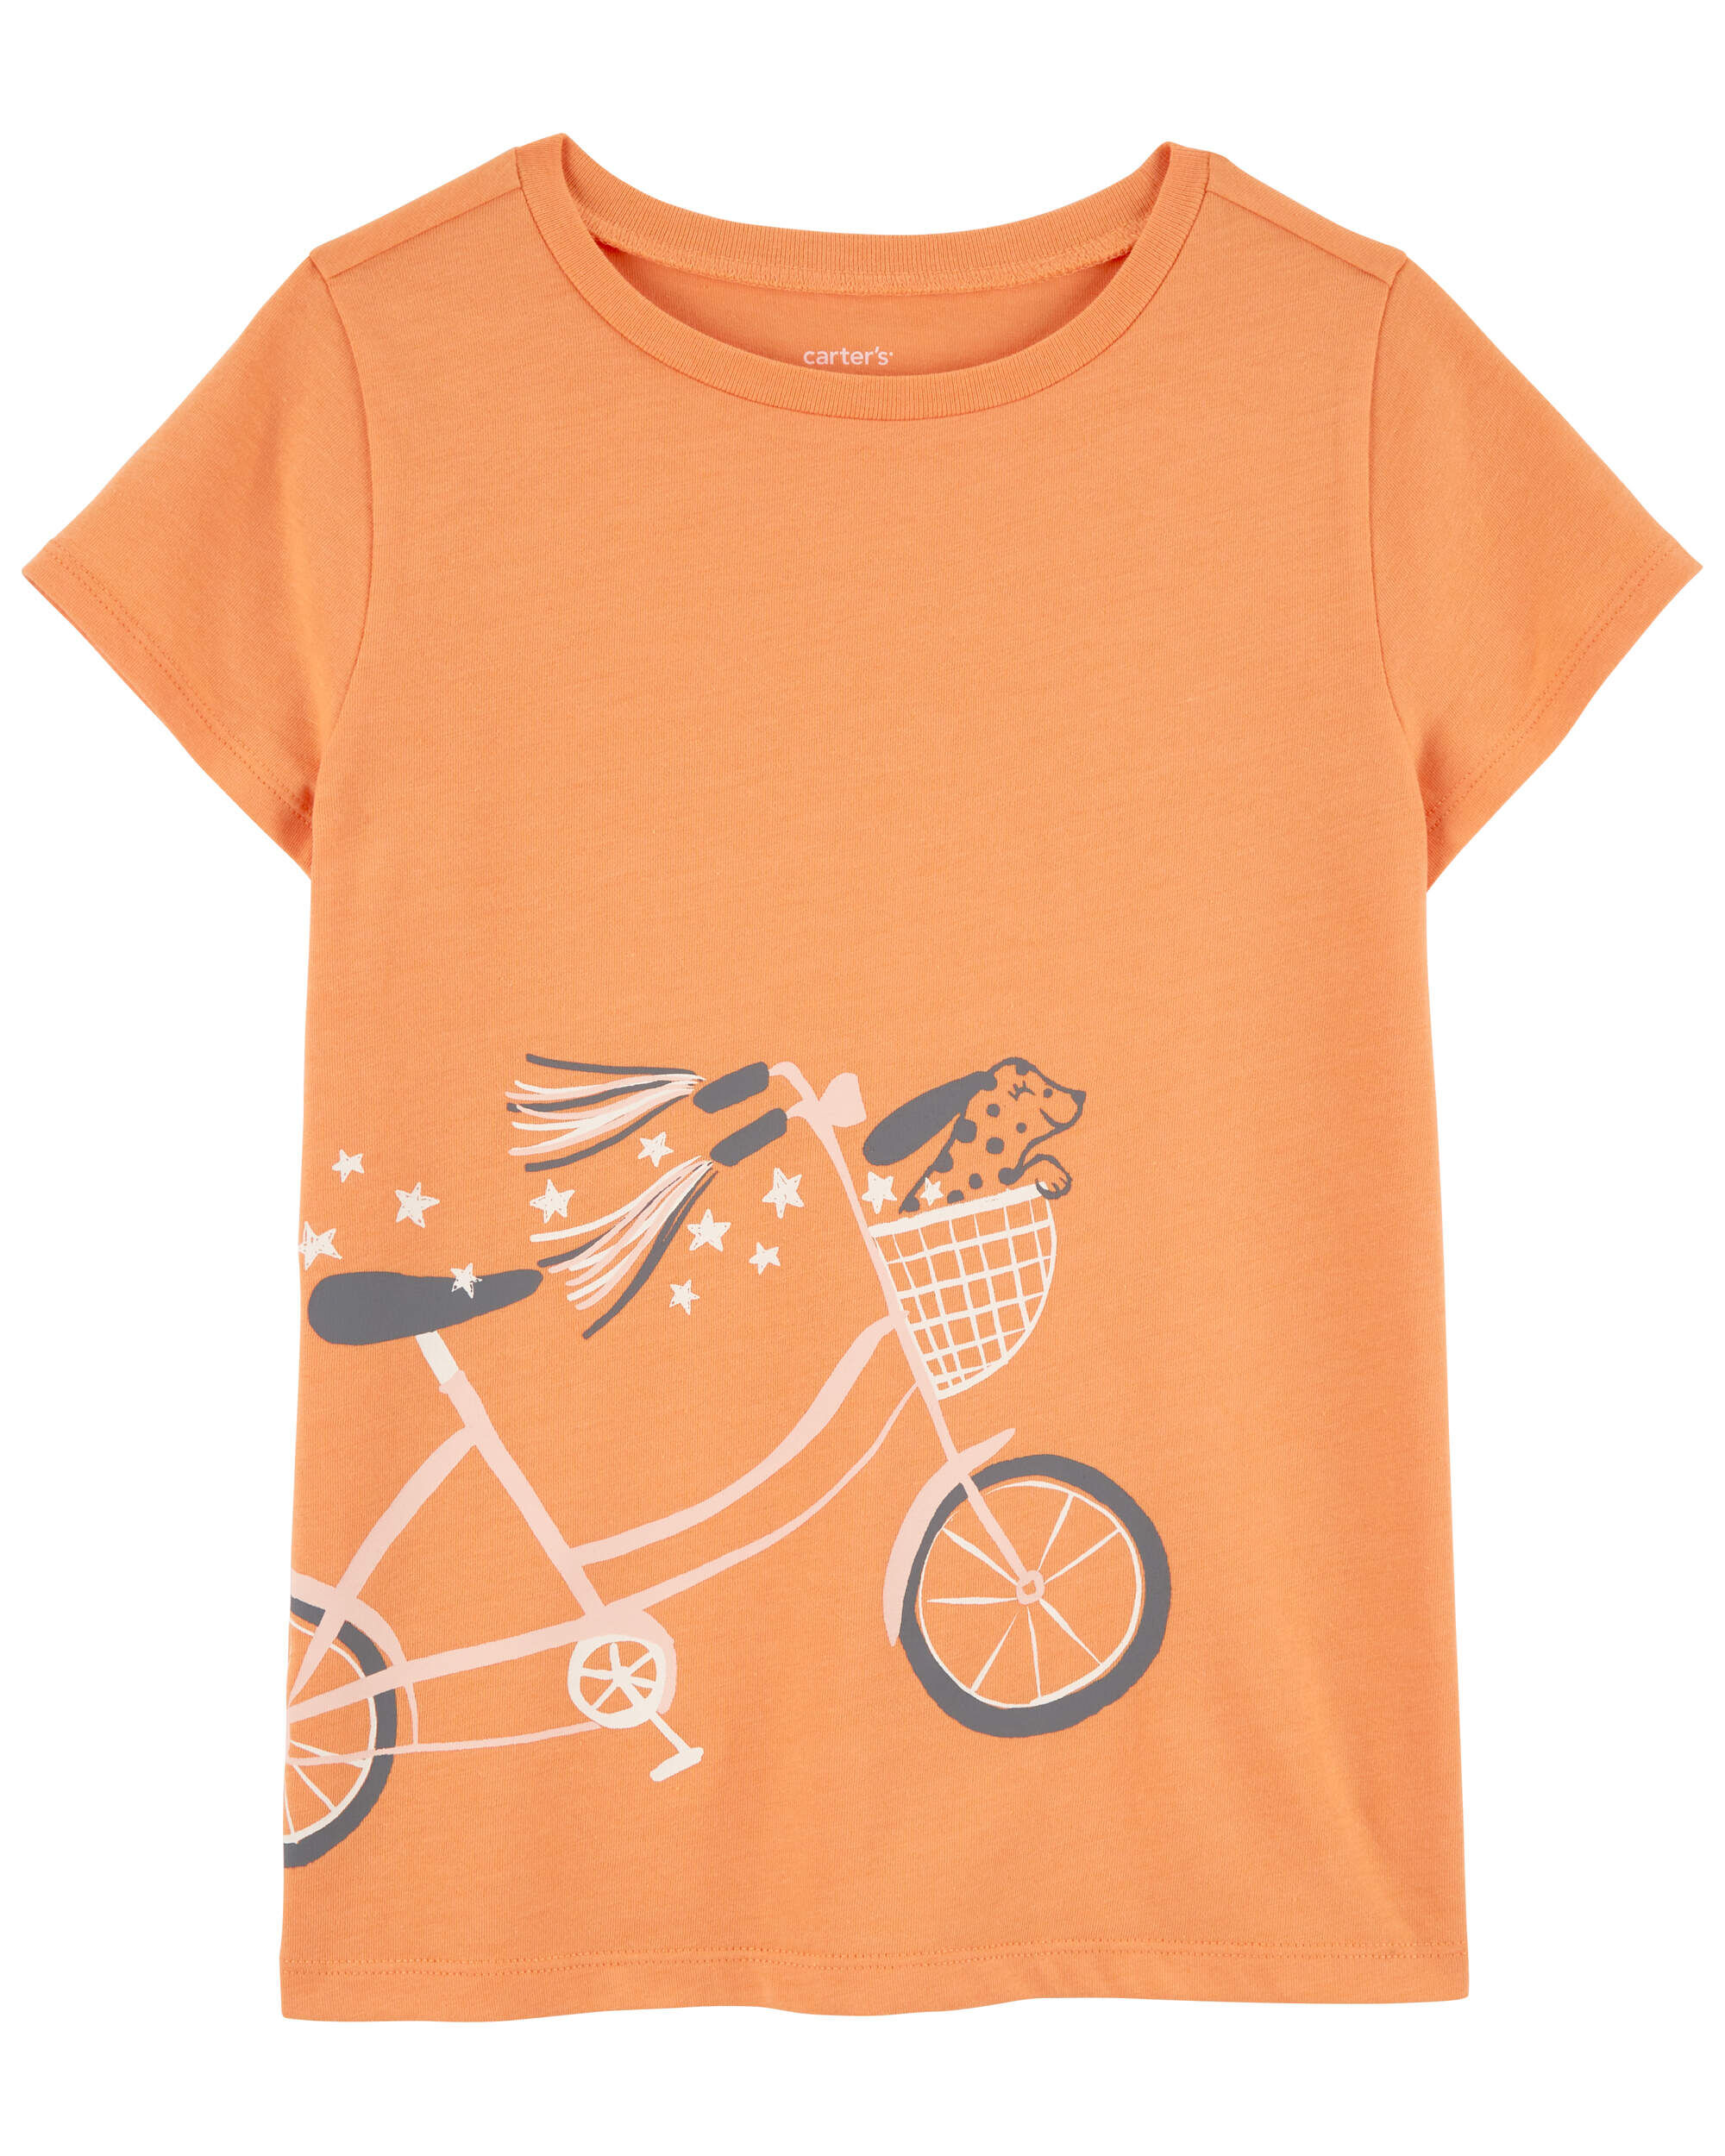 Детская футболка с рисунком велосипеда Carter's